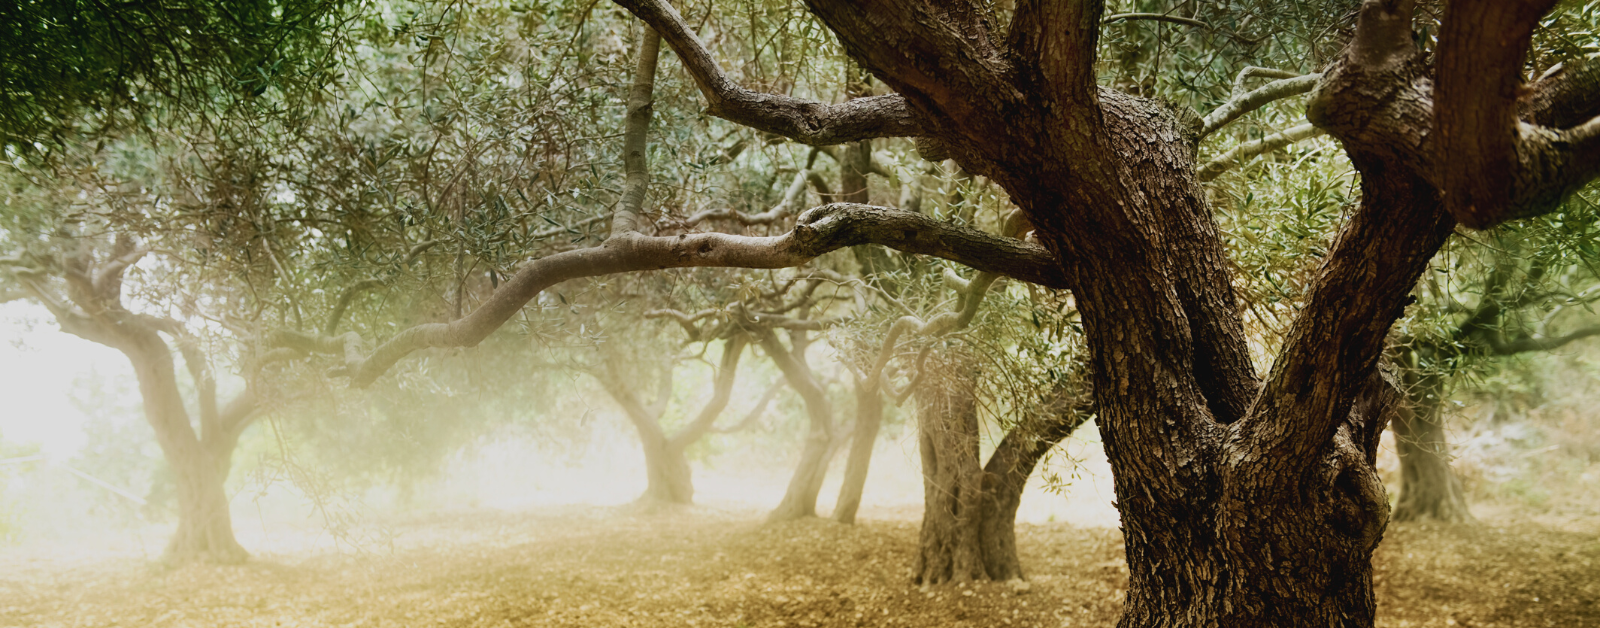 misty olive trees